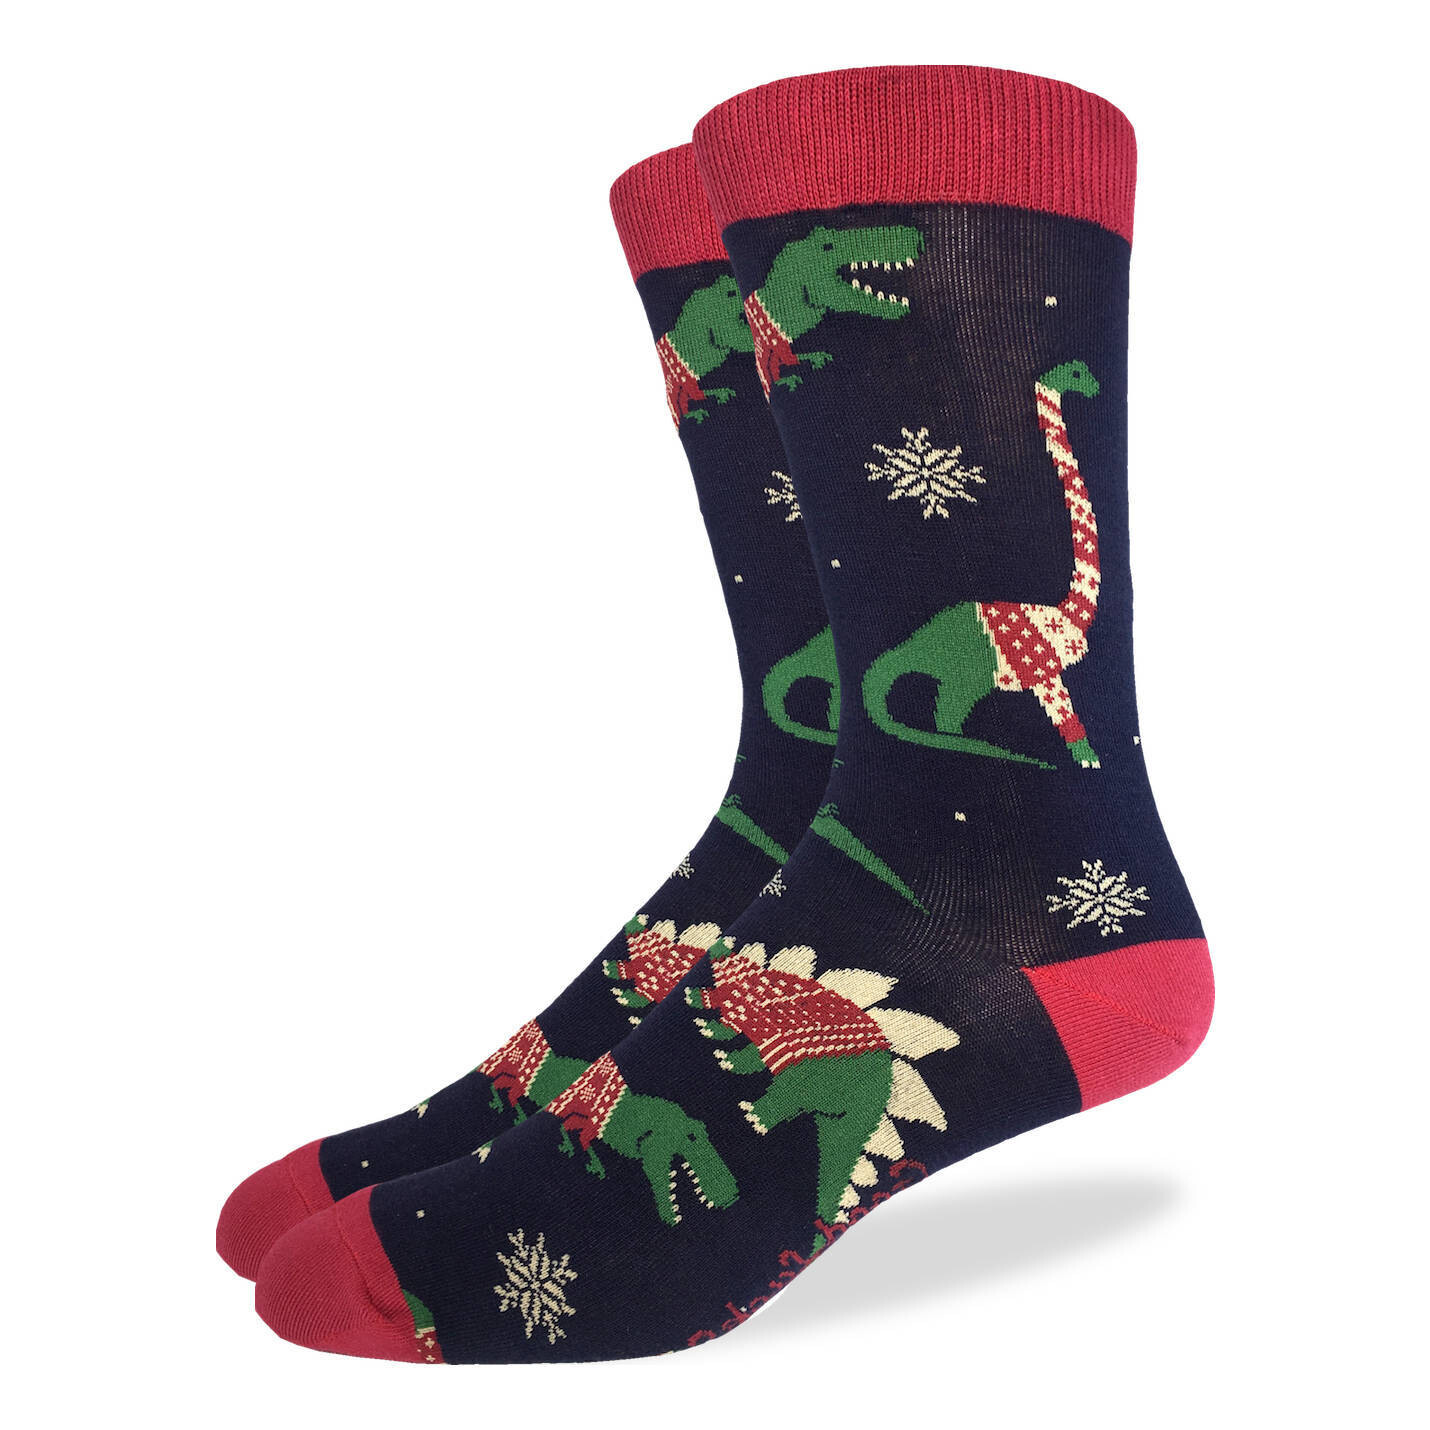 Christmas Sweater Dinosaur socks | M/L adult sizes | Good Luck Sock